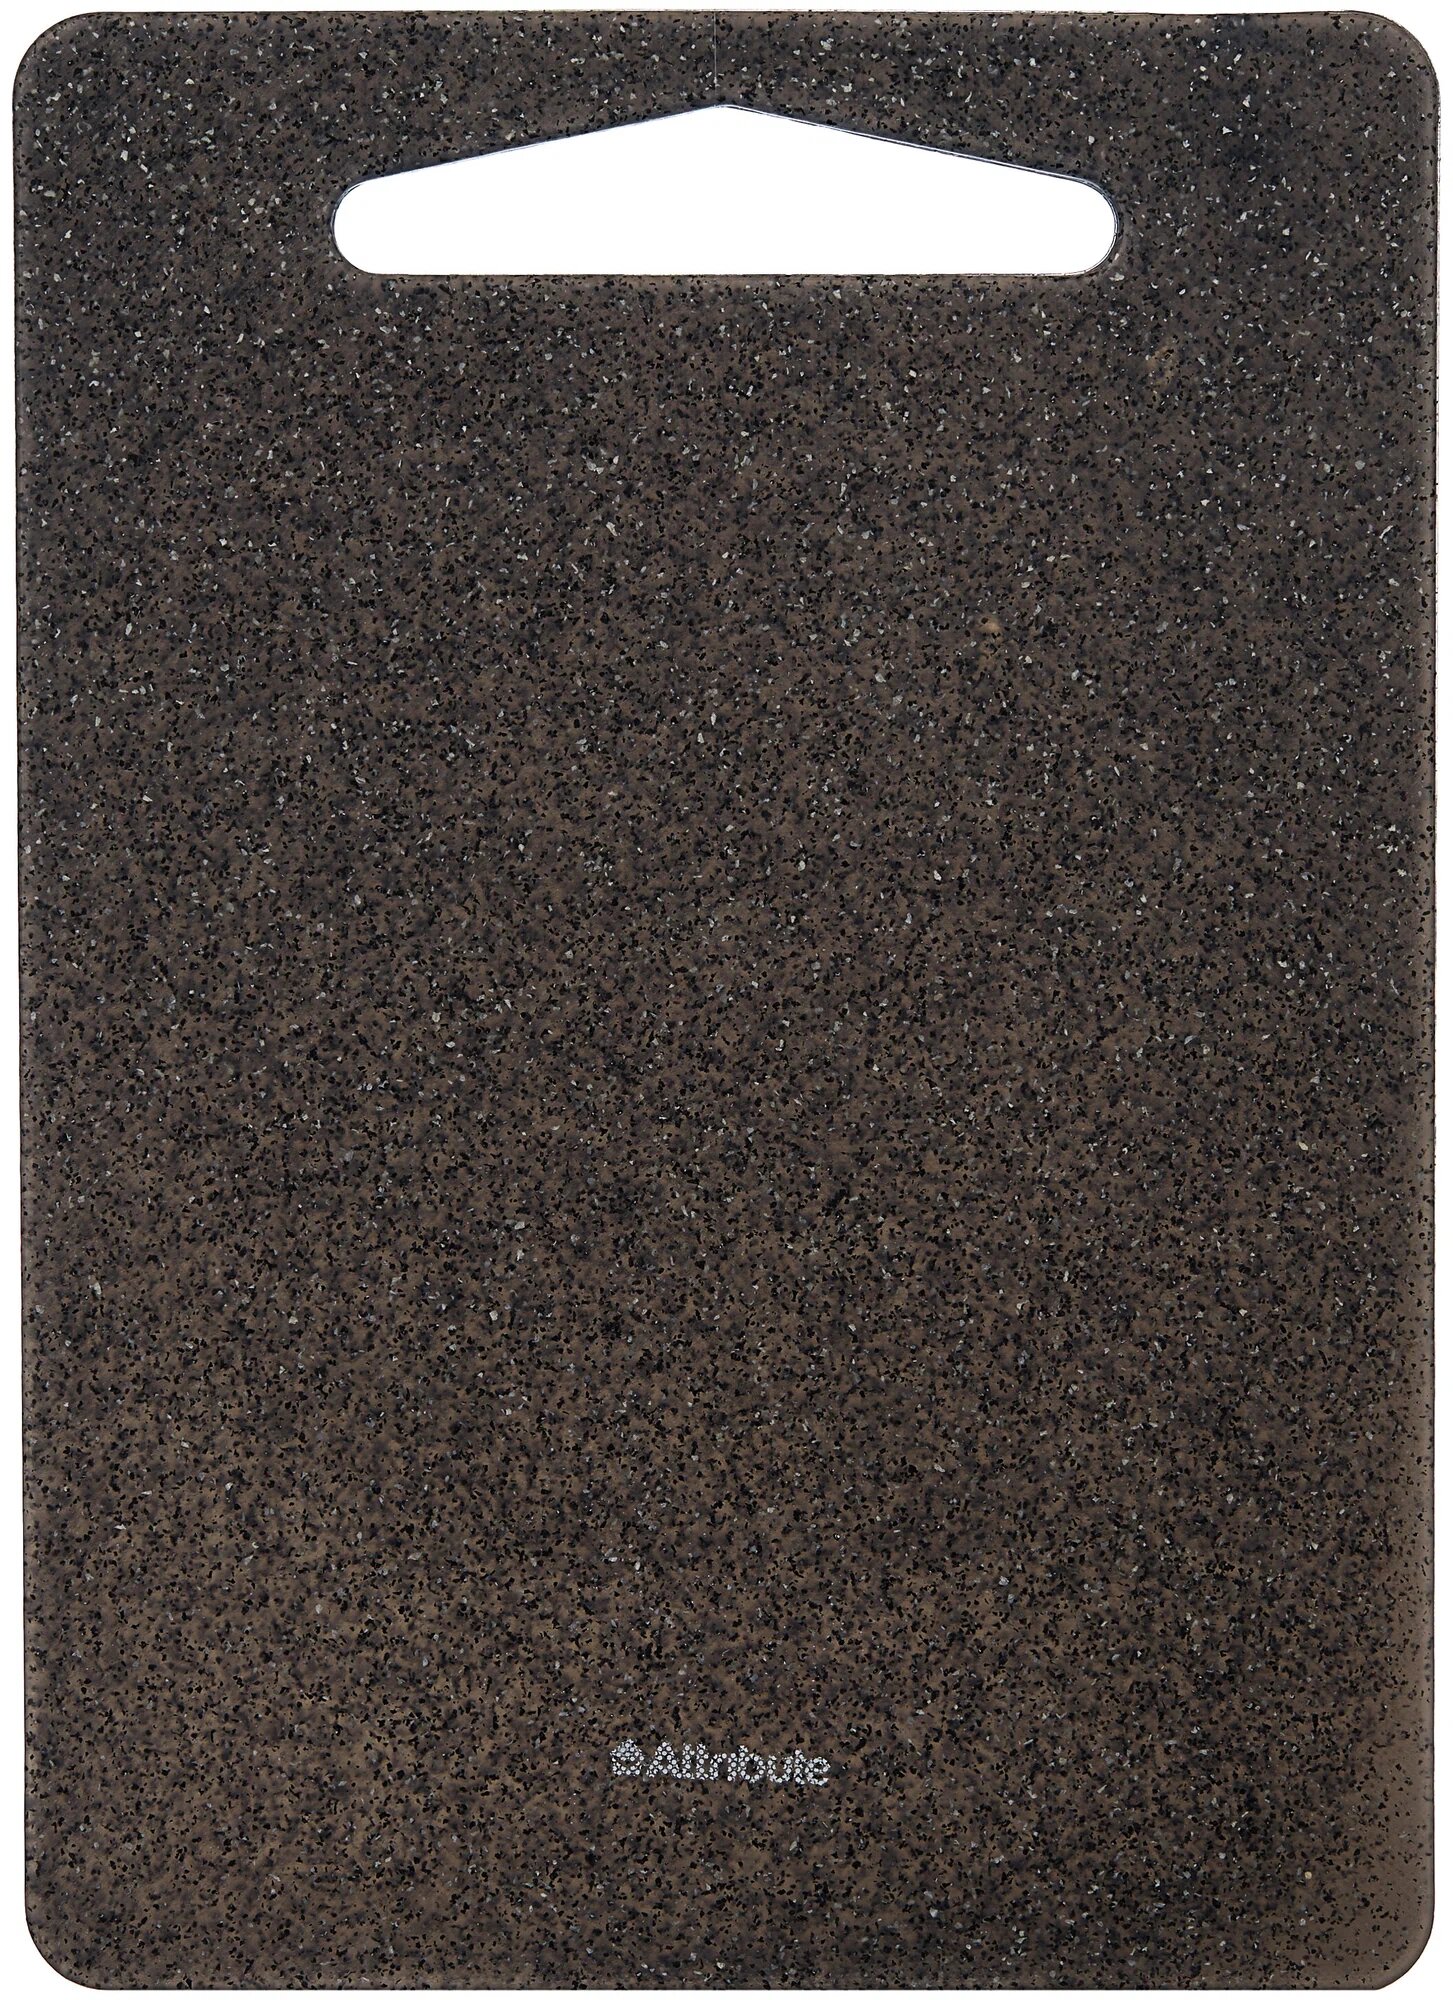 Разделочная доска Attribute GRANITE ABX113, 35х25 см, коричневая